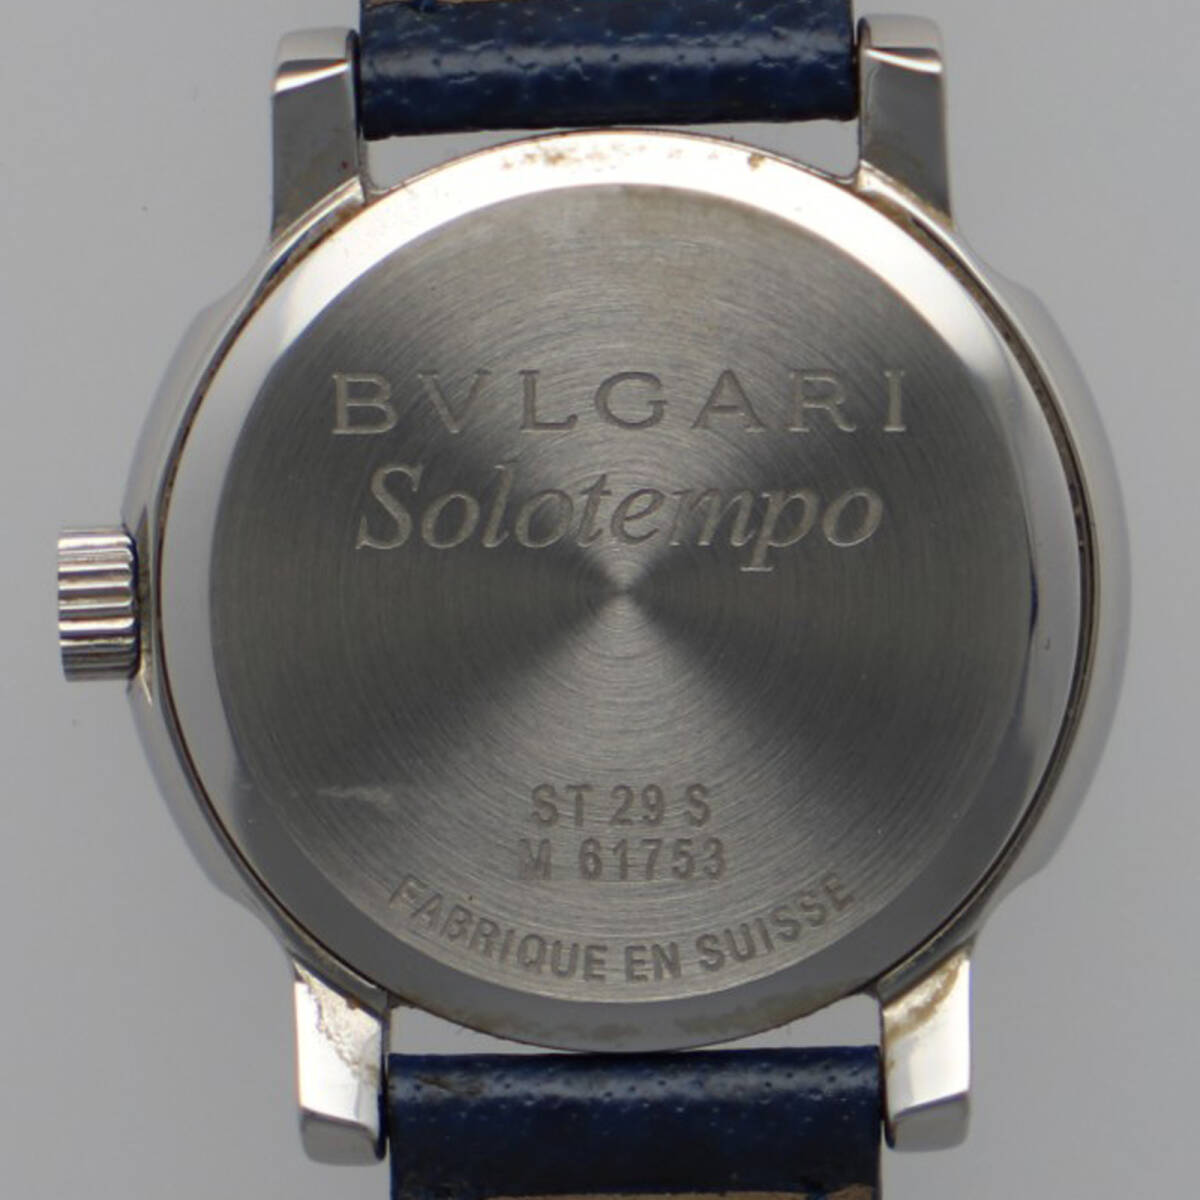 BVLGARI BVLGARY ST29S BVLGARY * BVLGARY Solotempo часы голубой dial SS/ кожа кварц женский [120694]